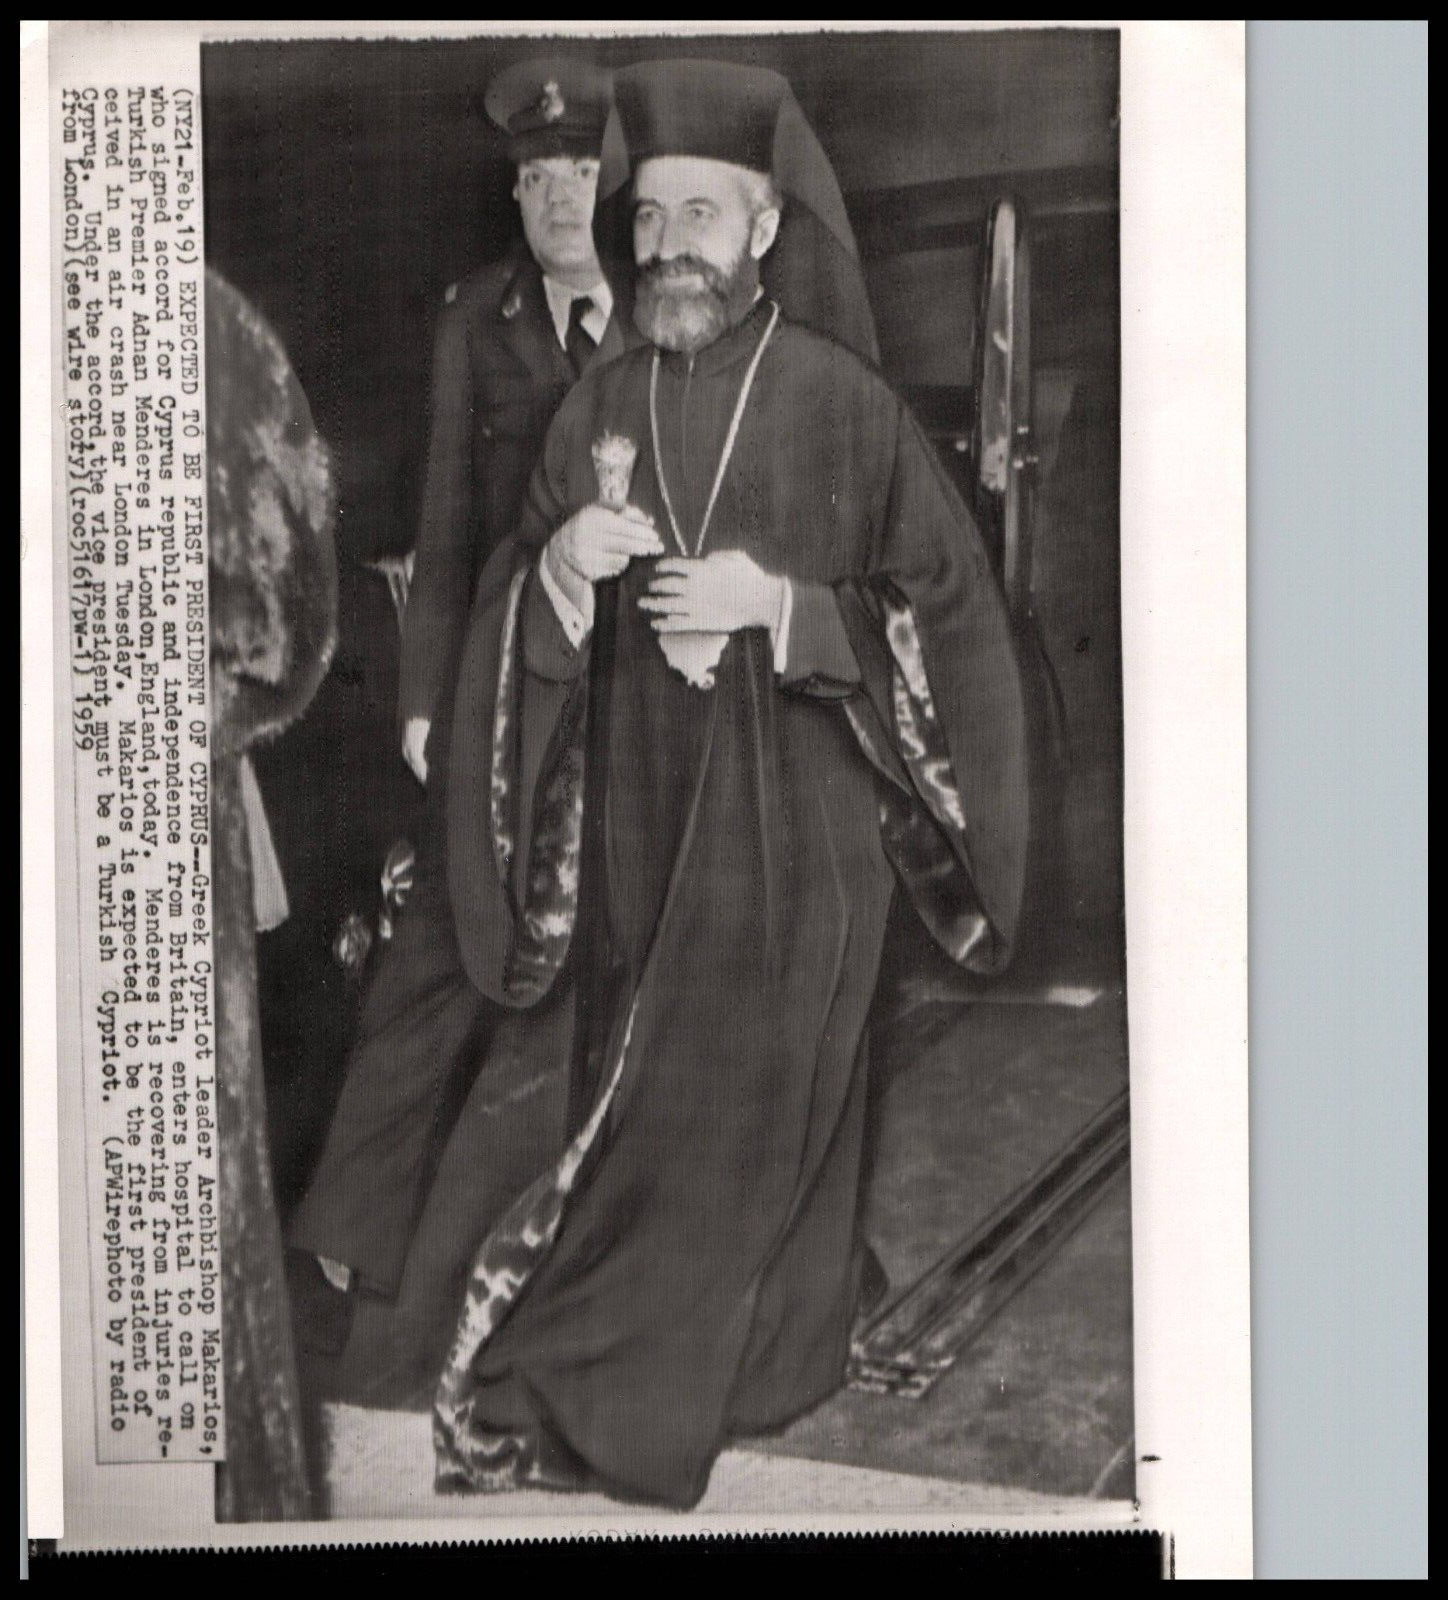 1959 CYPRIOT LEADER ARCHBISHOP MAKARIOS in LONDON PORTRAIT ORIG PRESS PHOTO 400